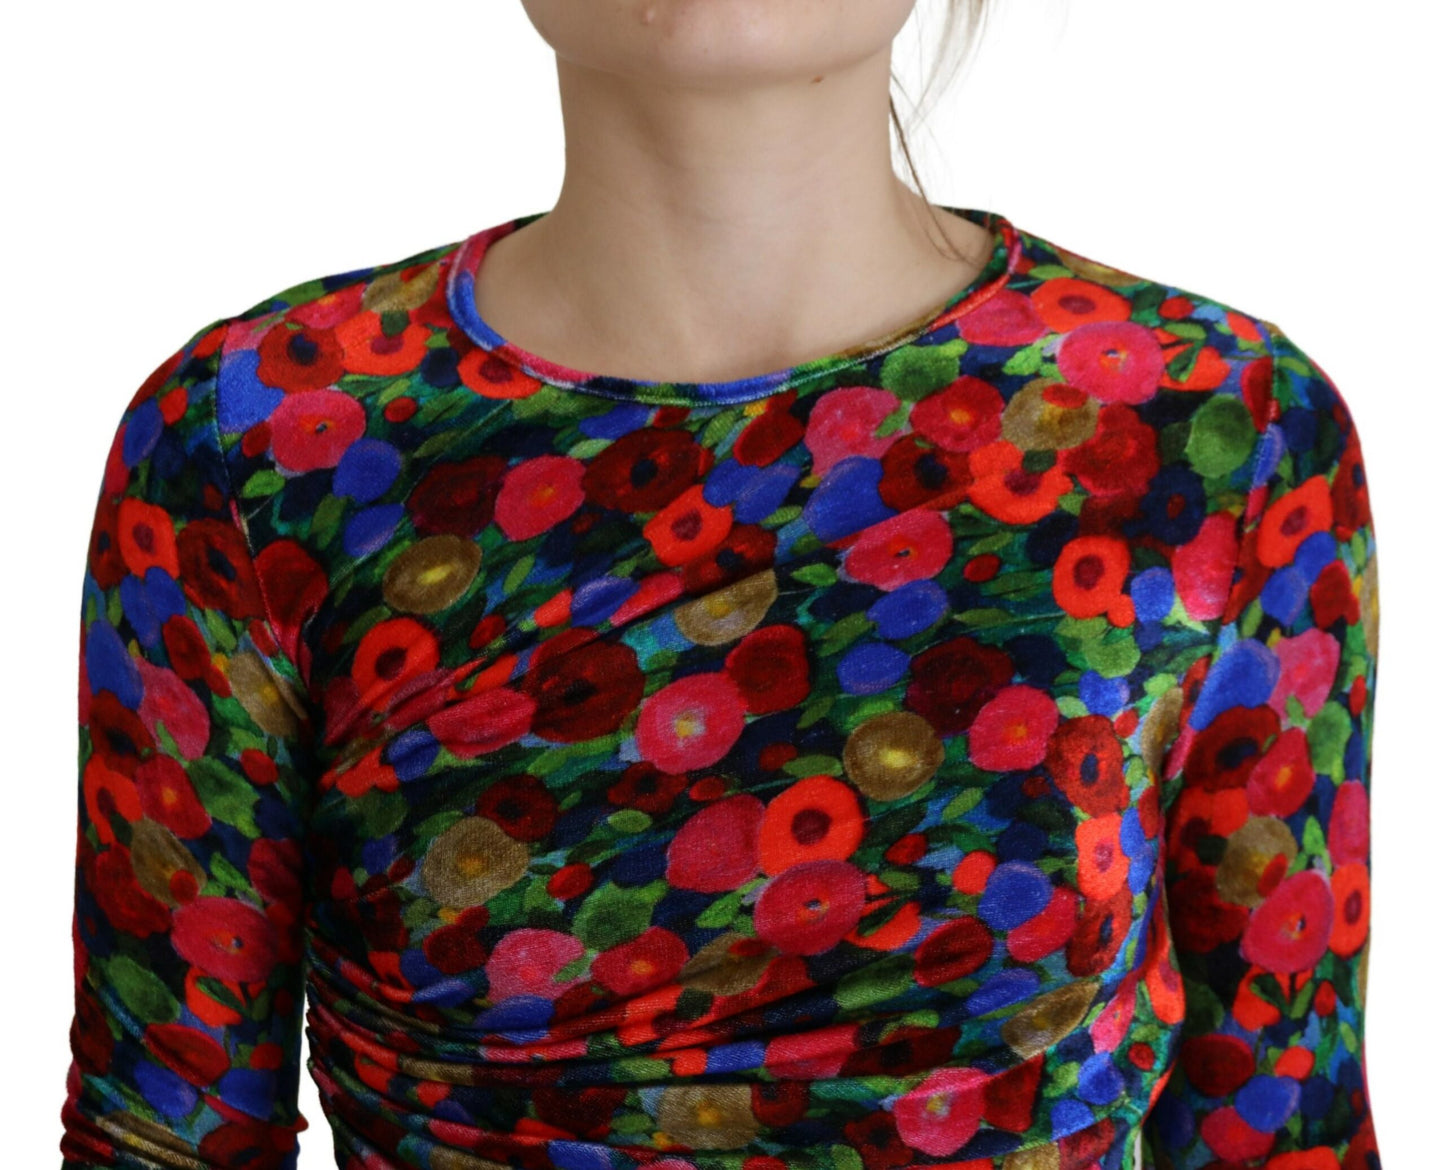 Multicolor Floral Bodycon Ruched Mini Dress